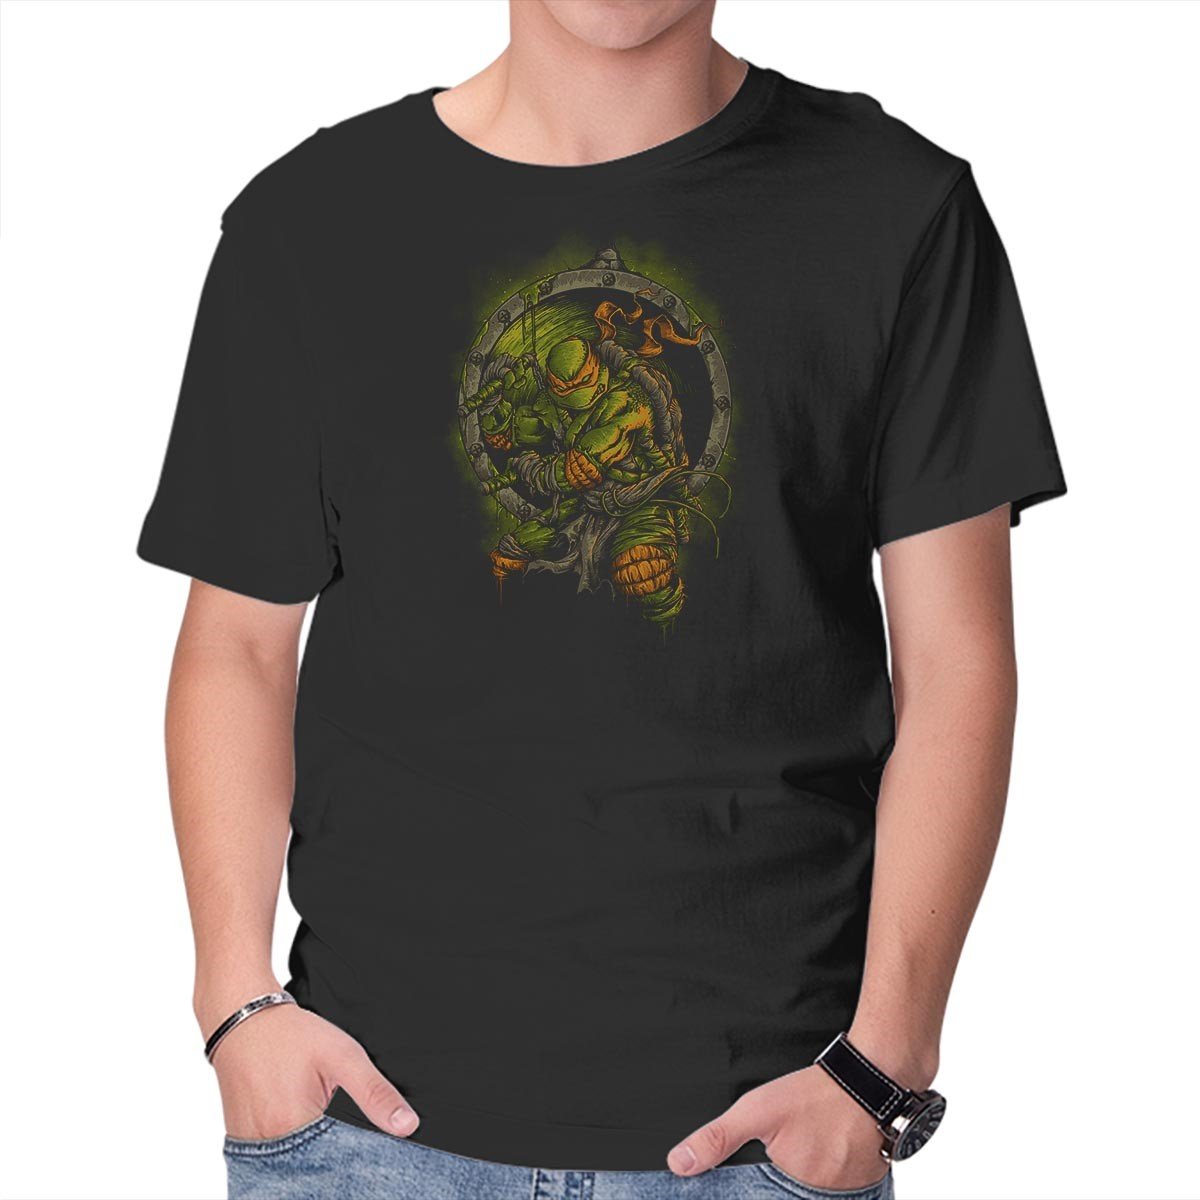 TeeFury Men’s Graphic T-shirt Turtle Titan - TV Show | Cartoon | Black | Small - image 1 of 6